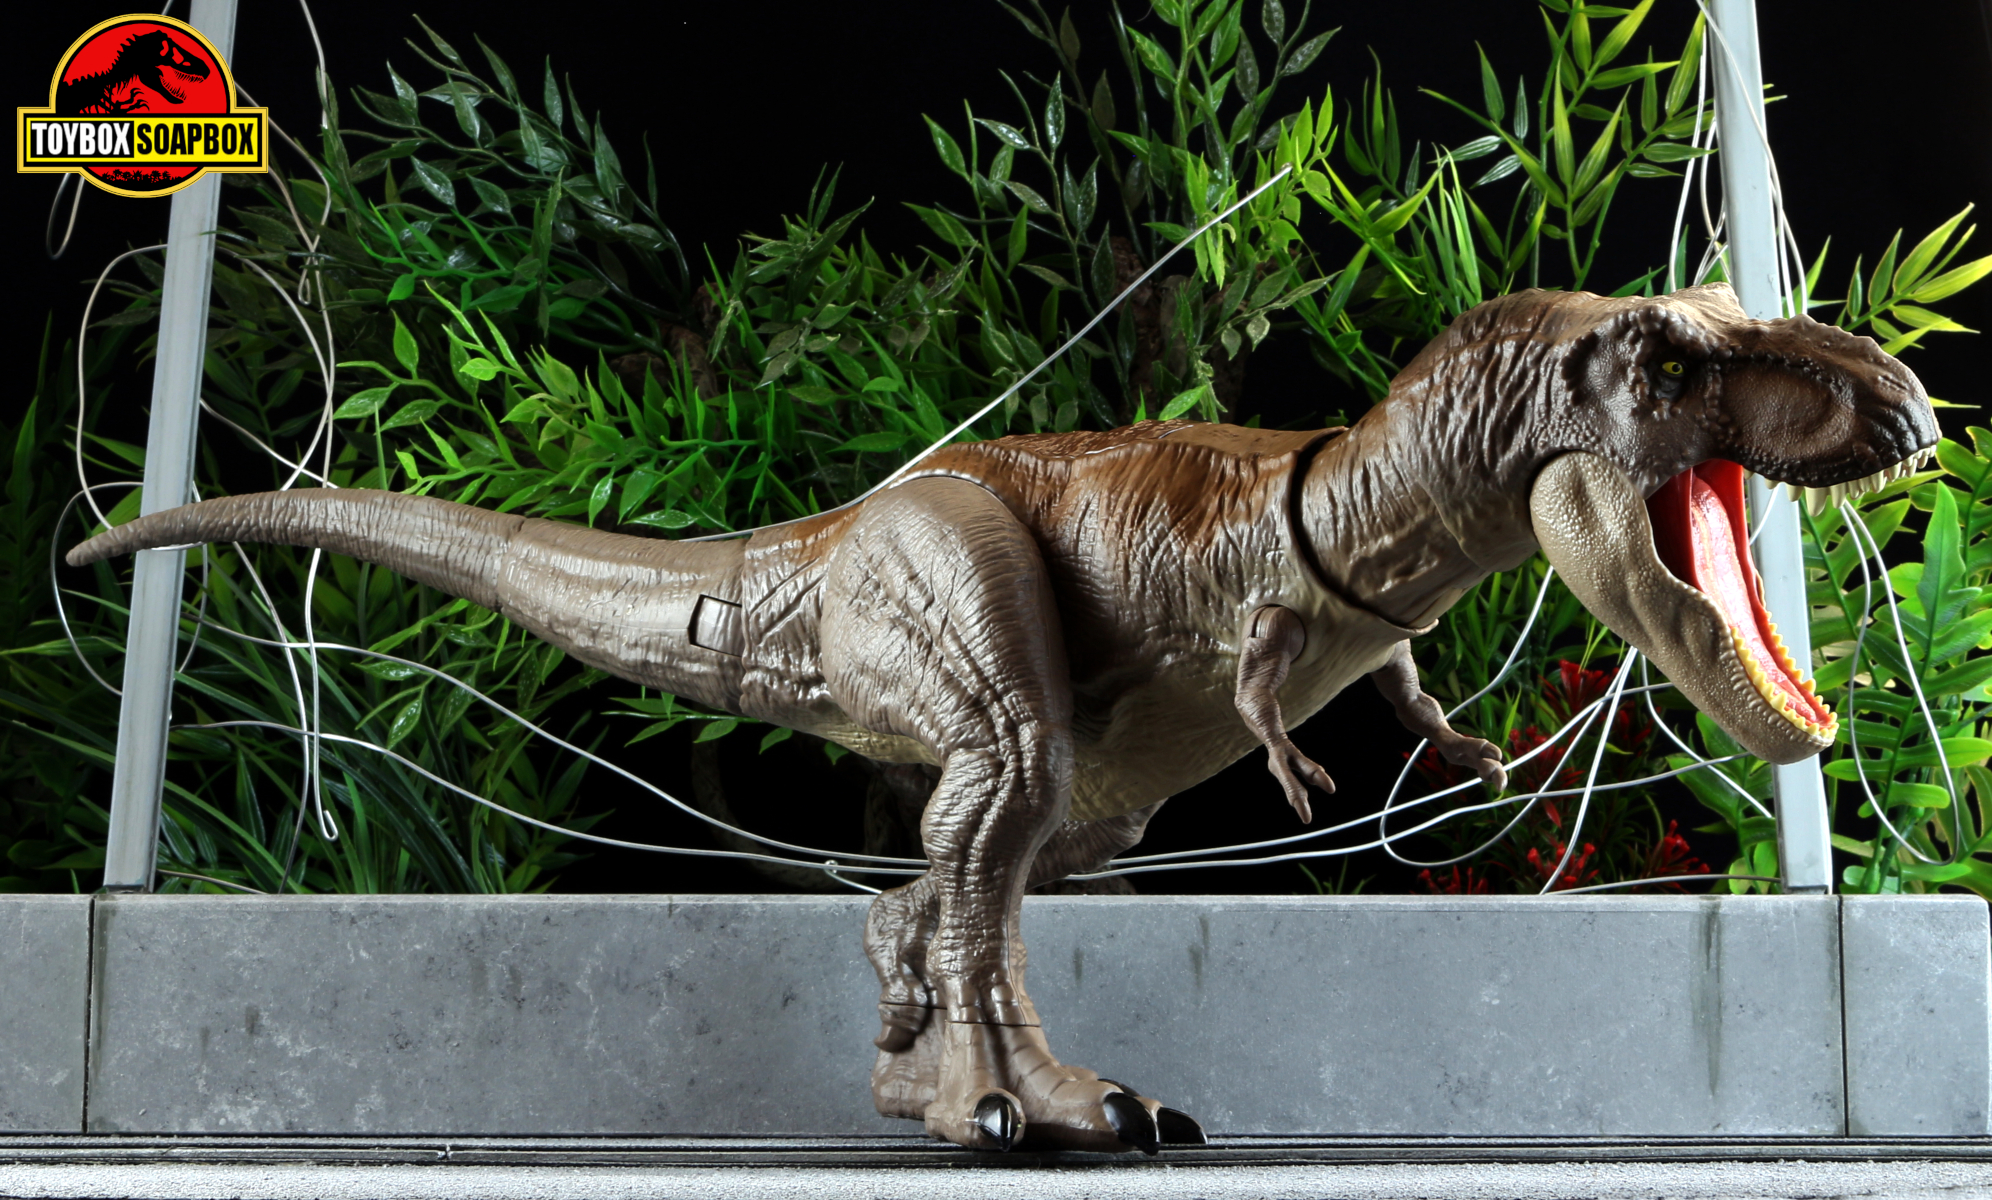 jurassic world bite and fight tyrannosaurus rex review